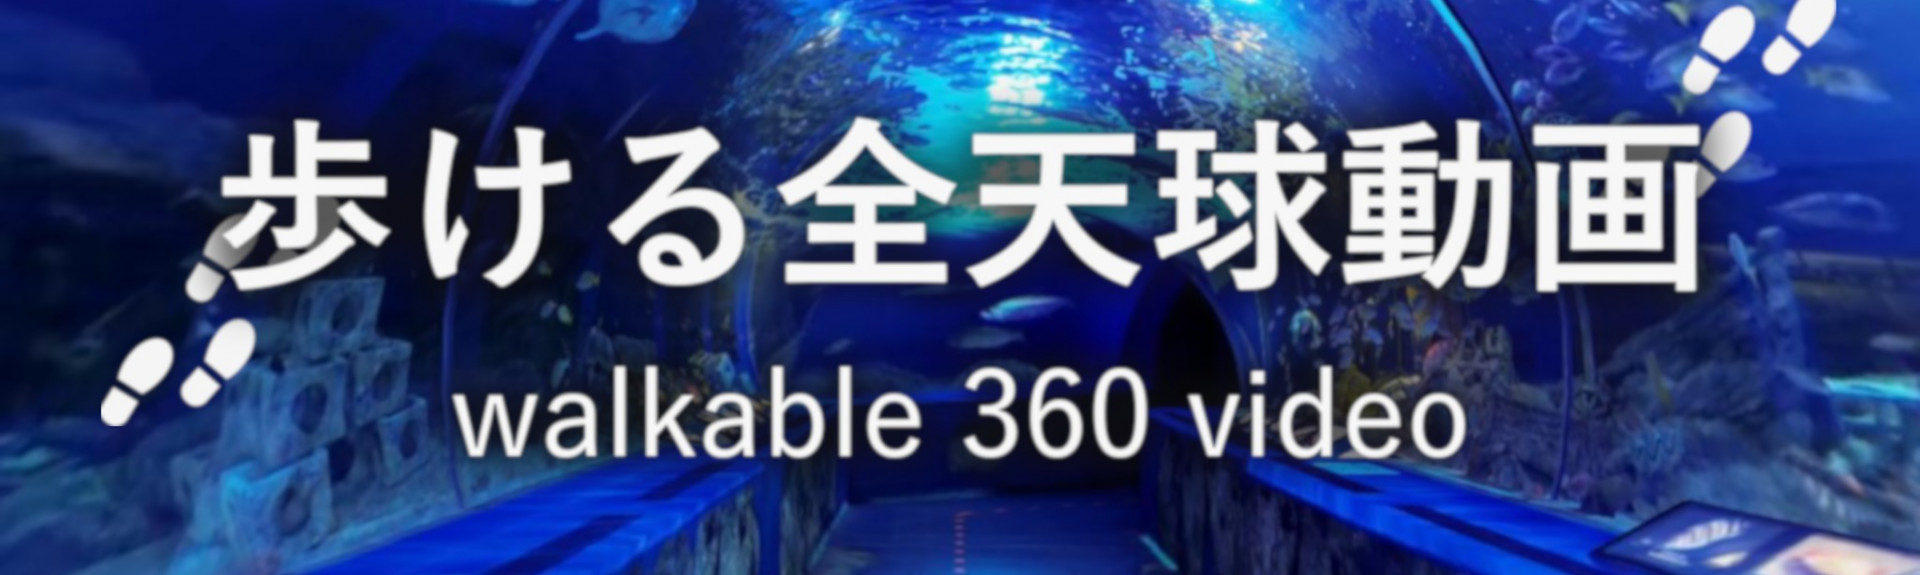 Walkable 360 Video